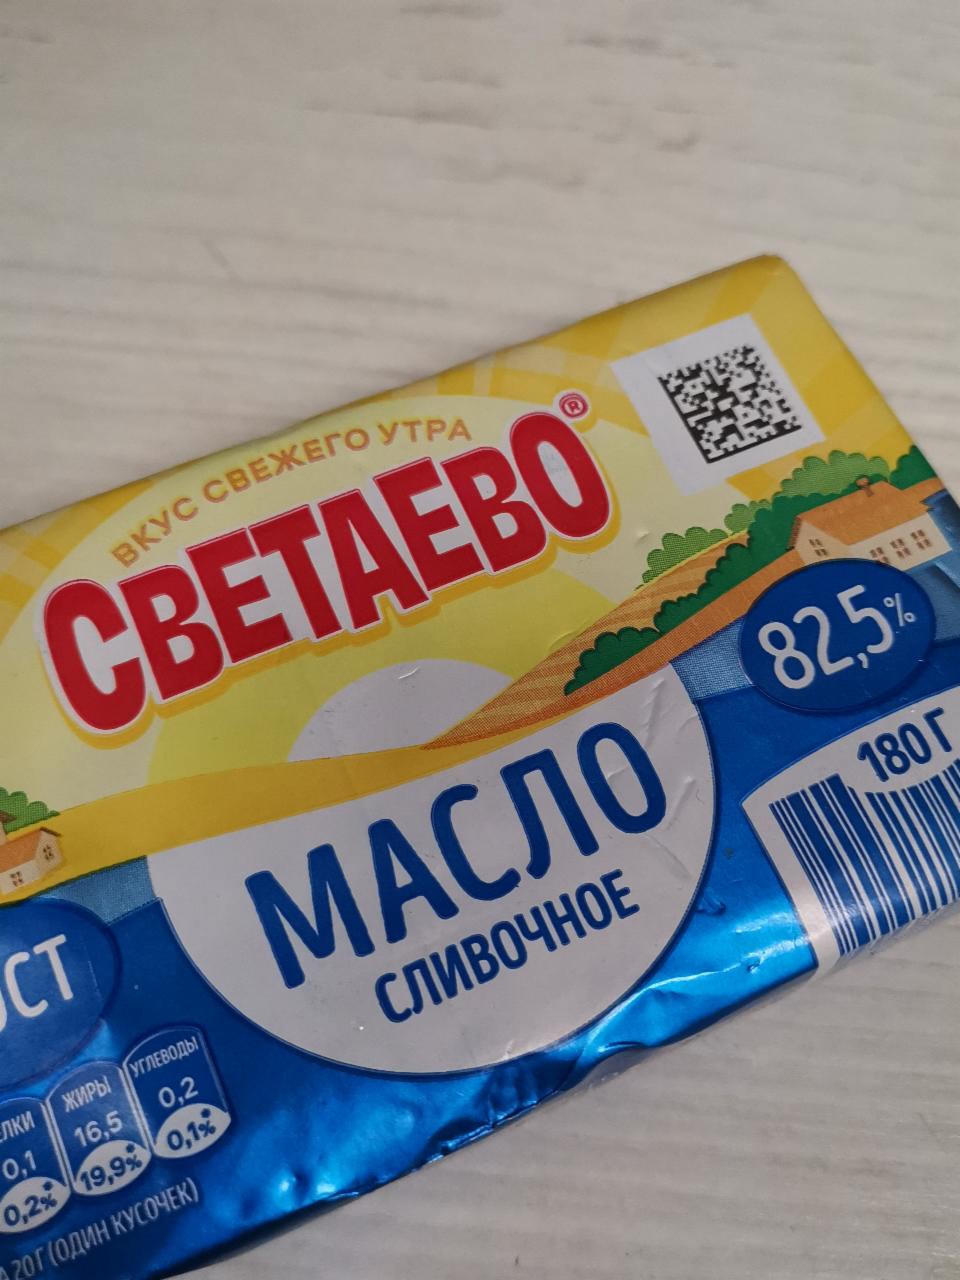 Фото - Масло сливочное 82.5% Светаево